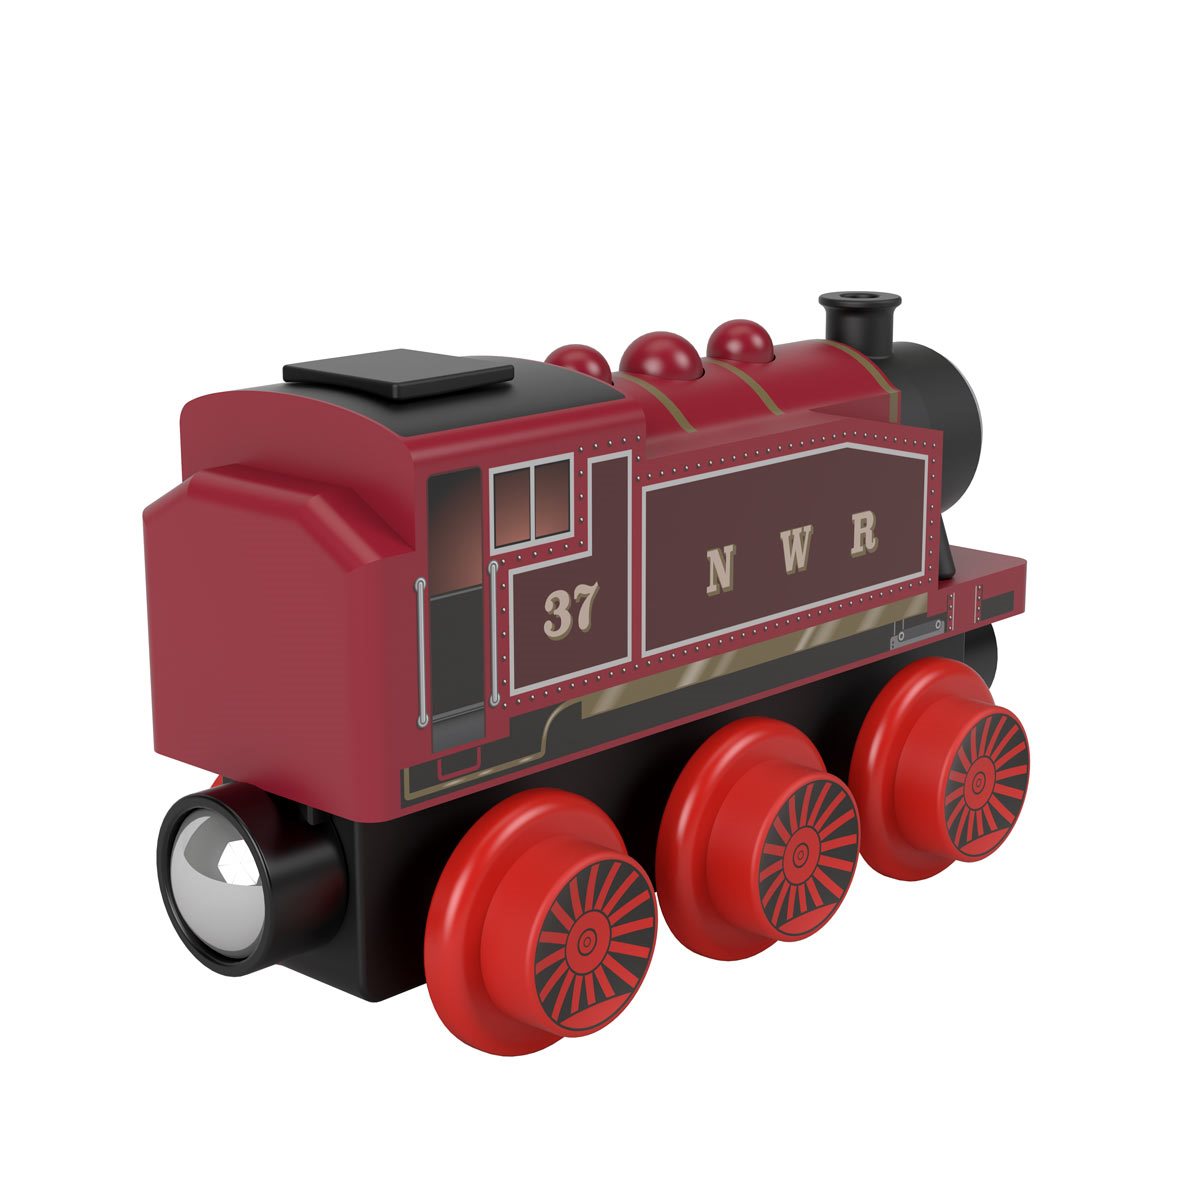 Rosie Thomas the Tank Engine & Friends Wooden Toy Train 